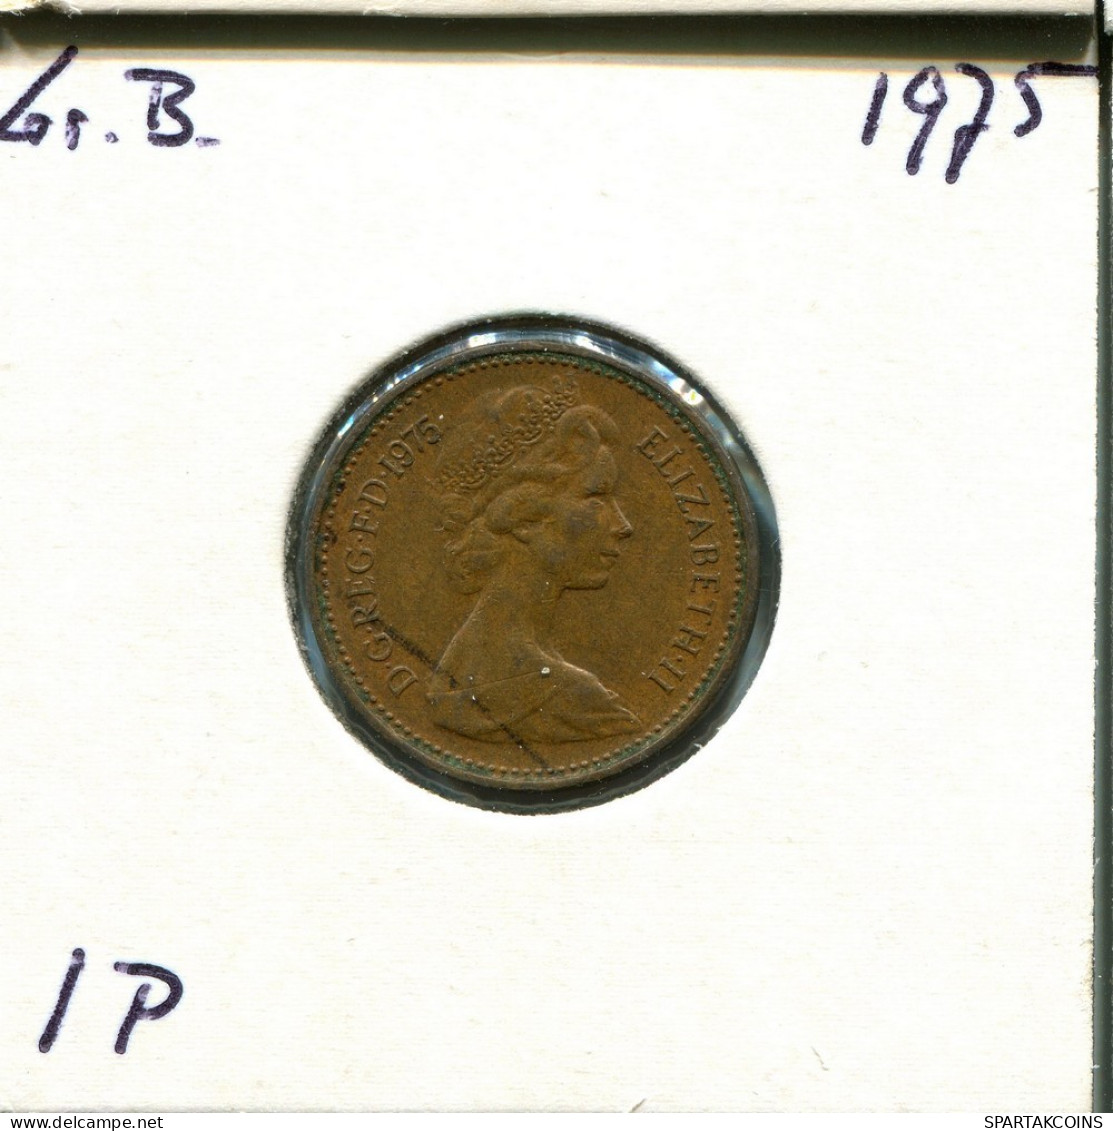 NEW PENNY 1975 UK GRANDE-BRETAGNE GREAT BRITAIN Pièce #AU802.F.A - 1 Penny & 1 New Penny